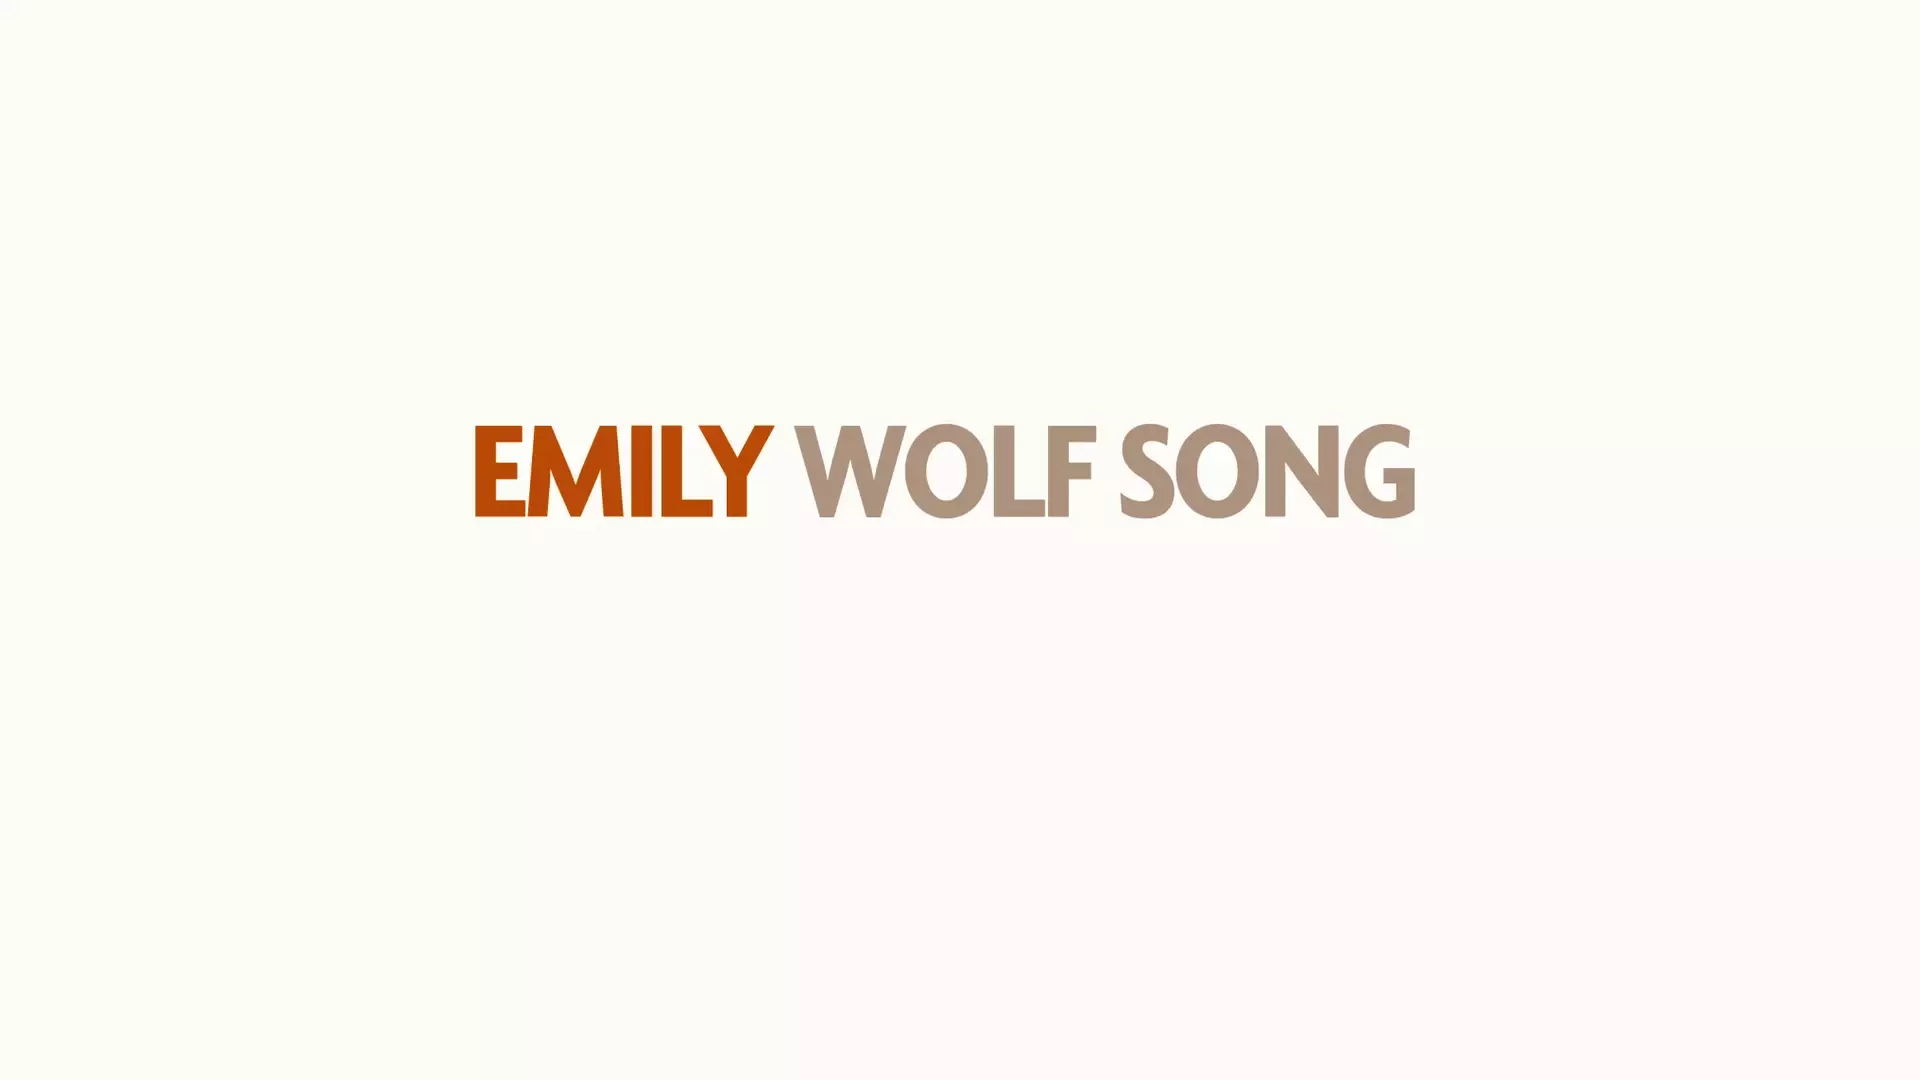 ashley merkley share emily bloom wolf song photos